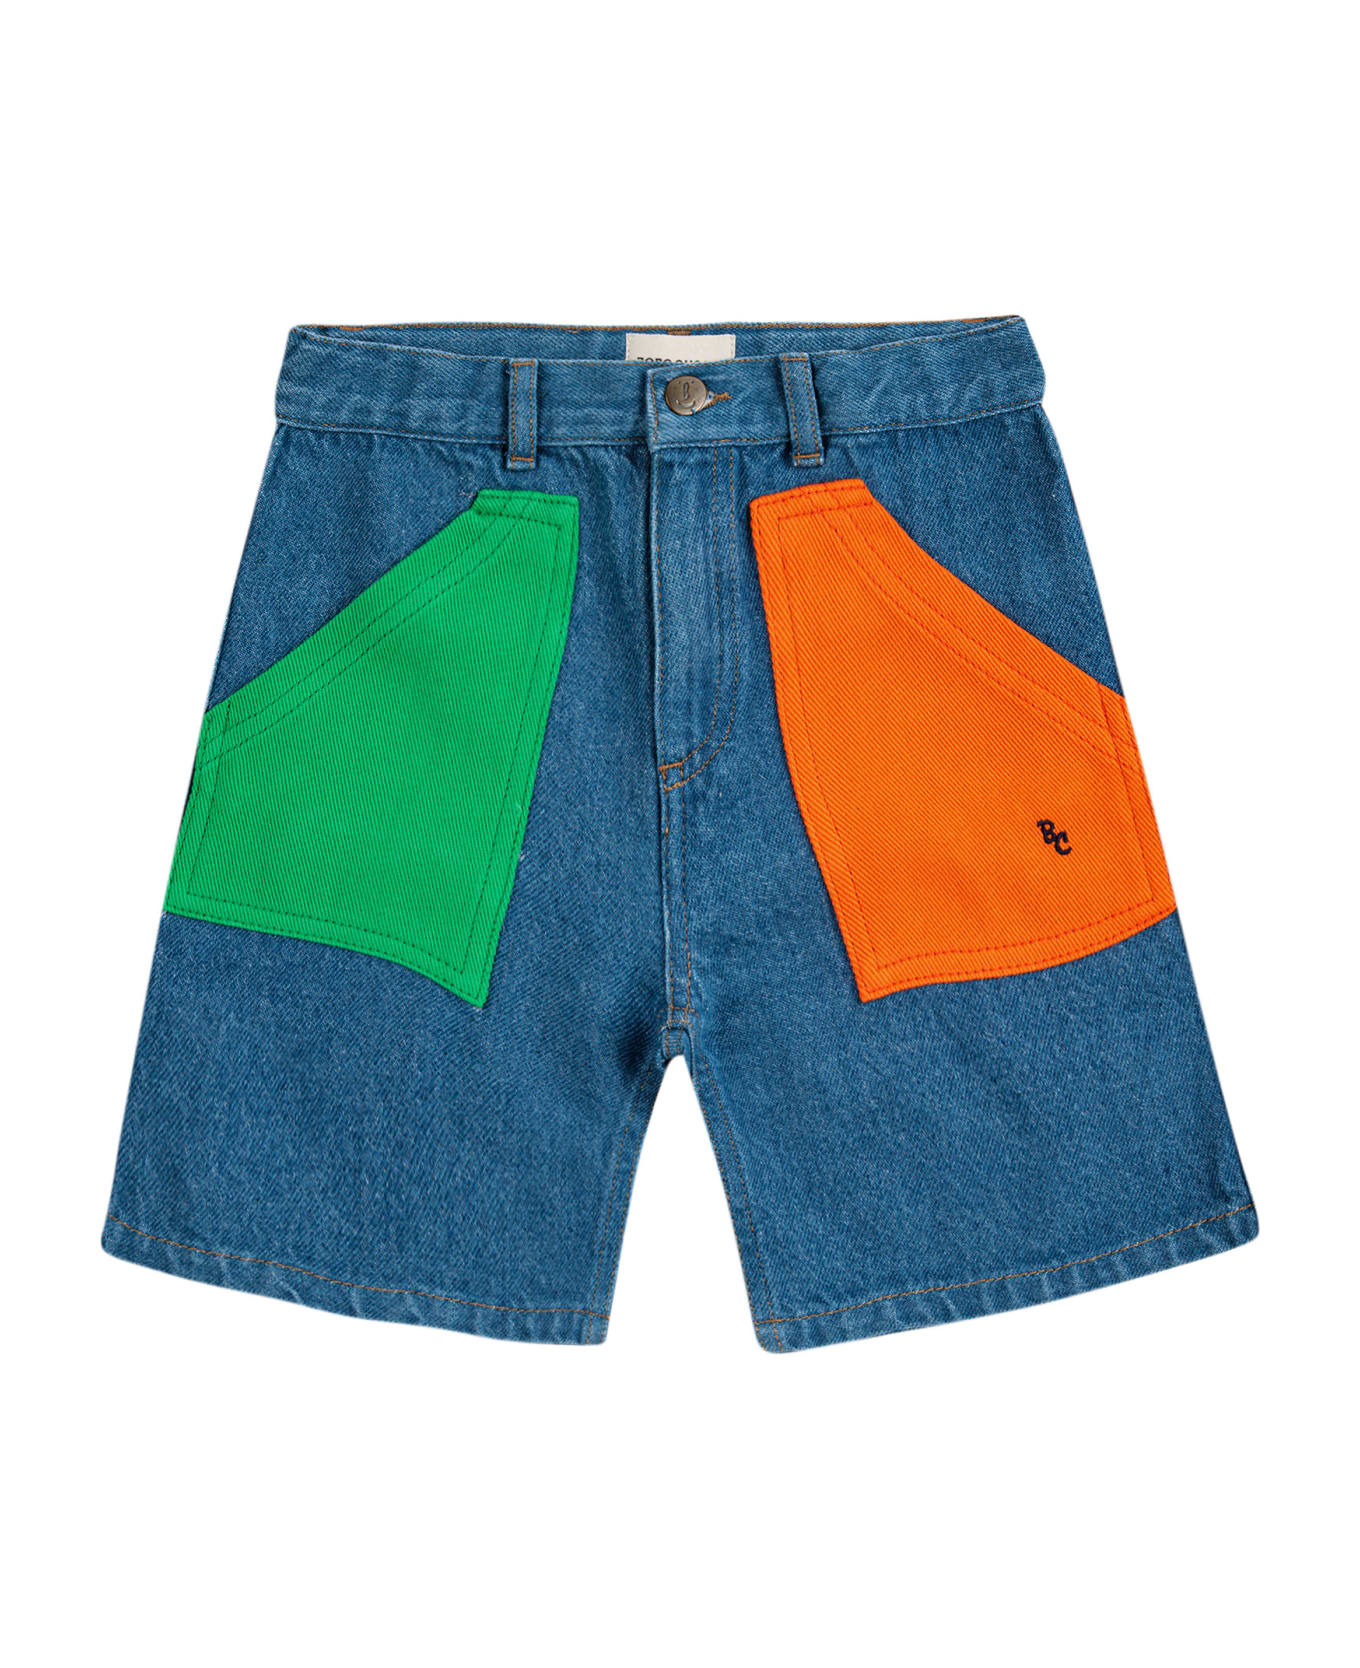 Bobo Choses Denim Short With Colorful Pockets For Boy - Denim